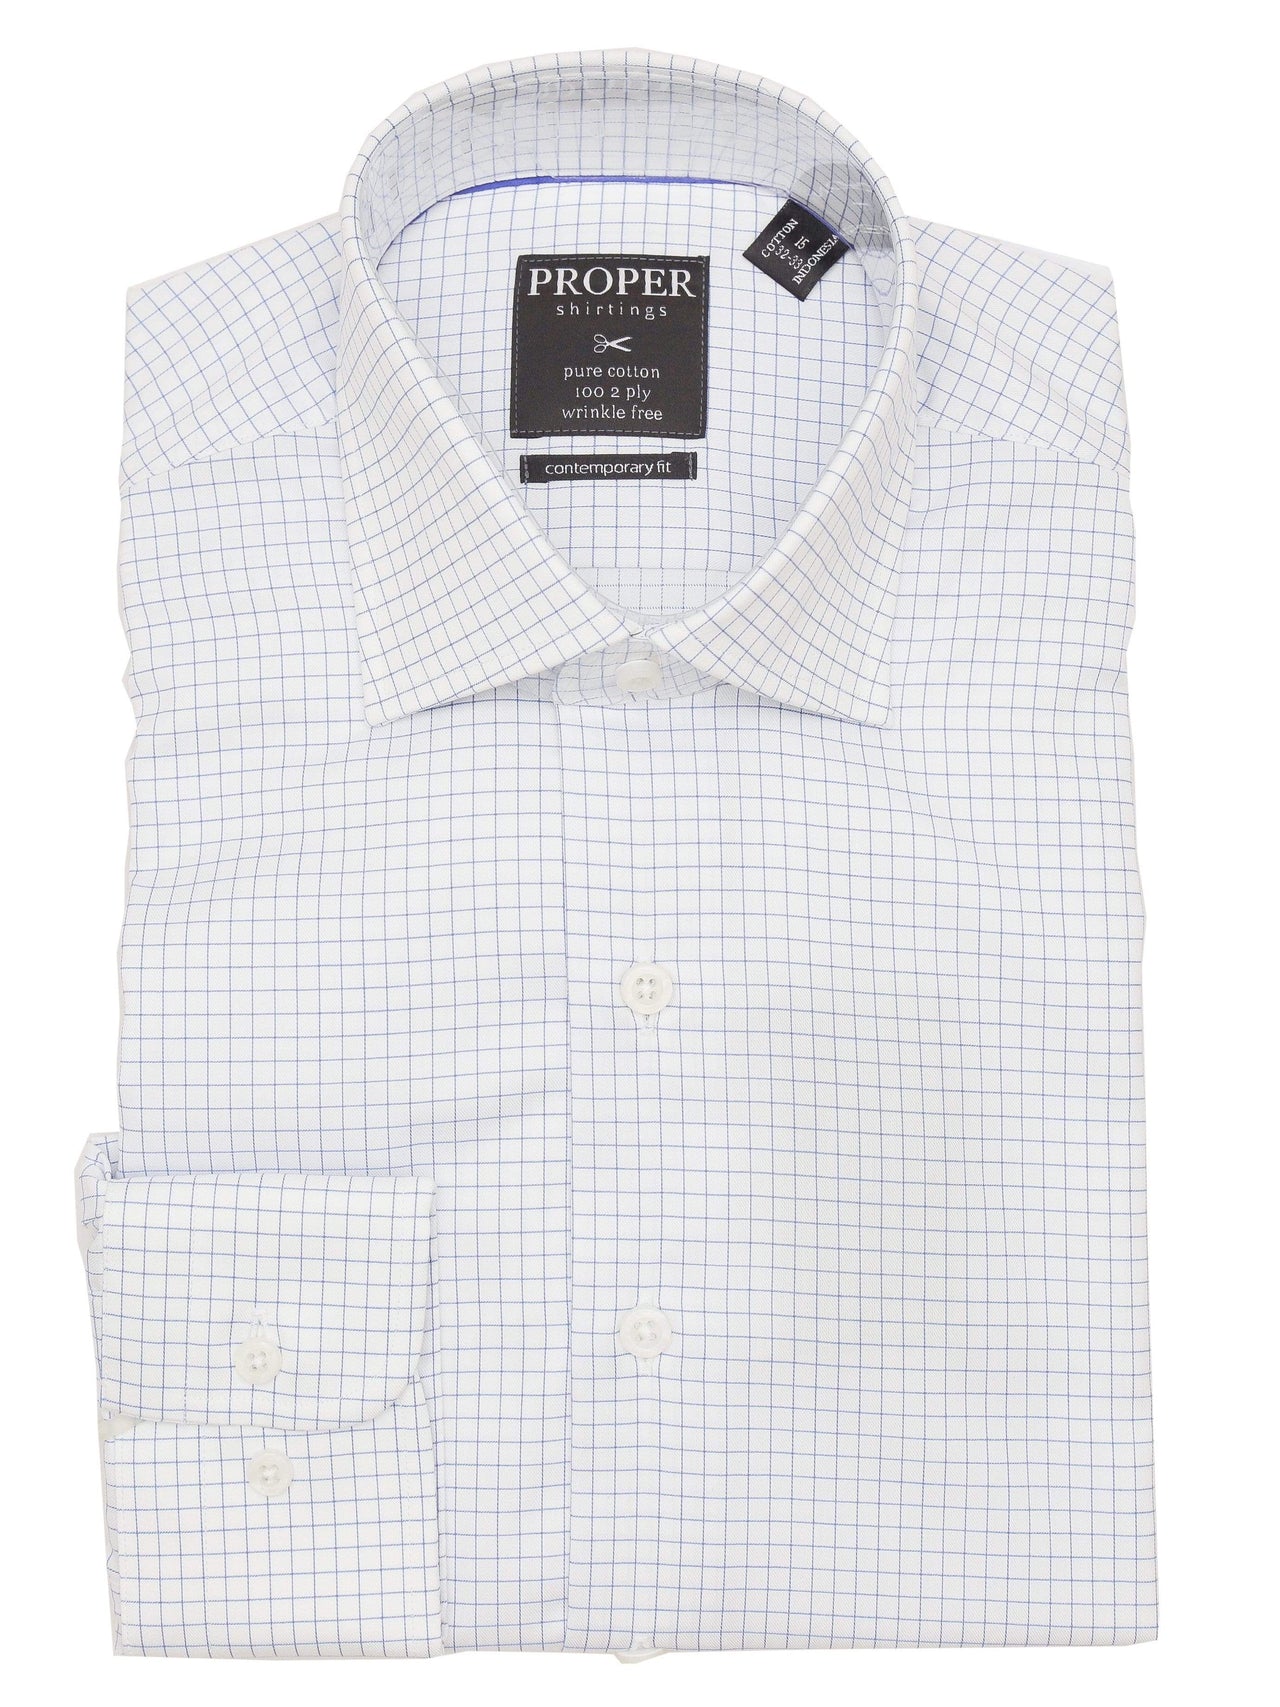 Brand P & S SHIRTS Mens Cotton Blue Checkered Slim Fit Cutaway Collar Wrinkle Free Dress Shirt